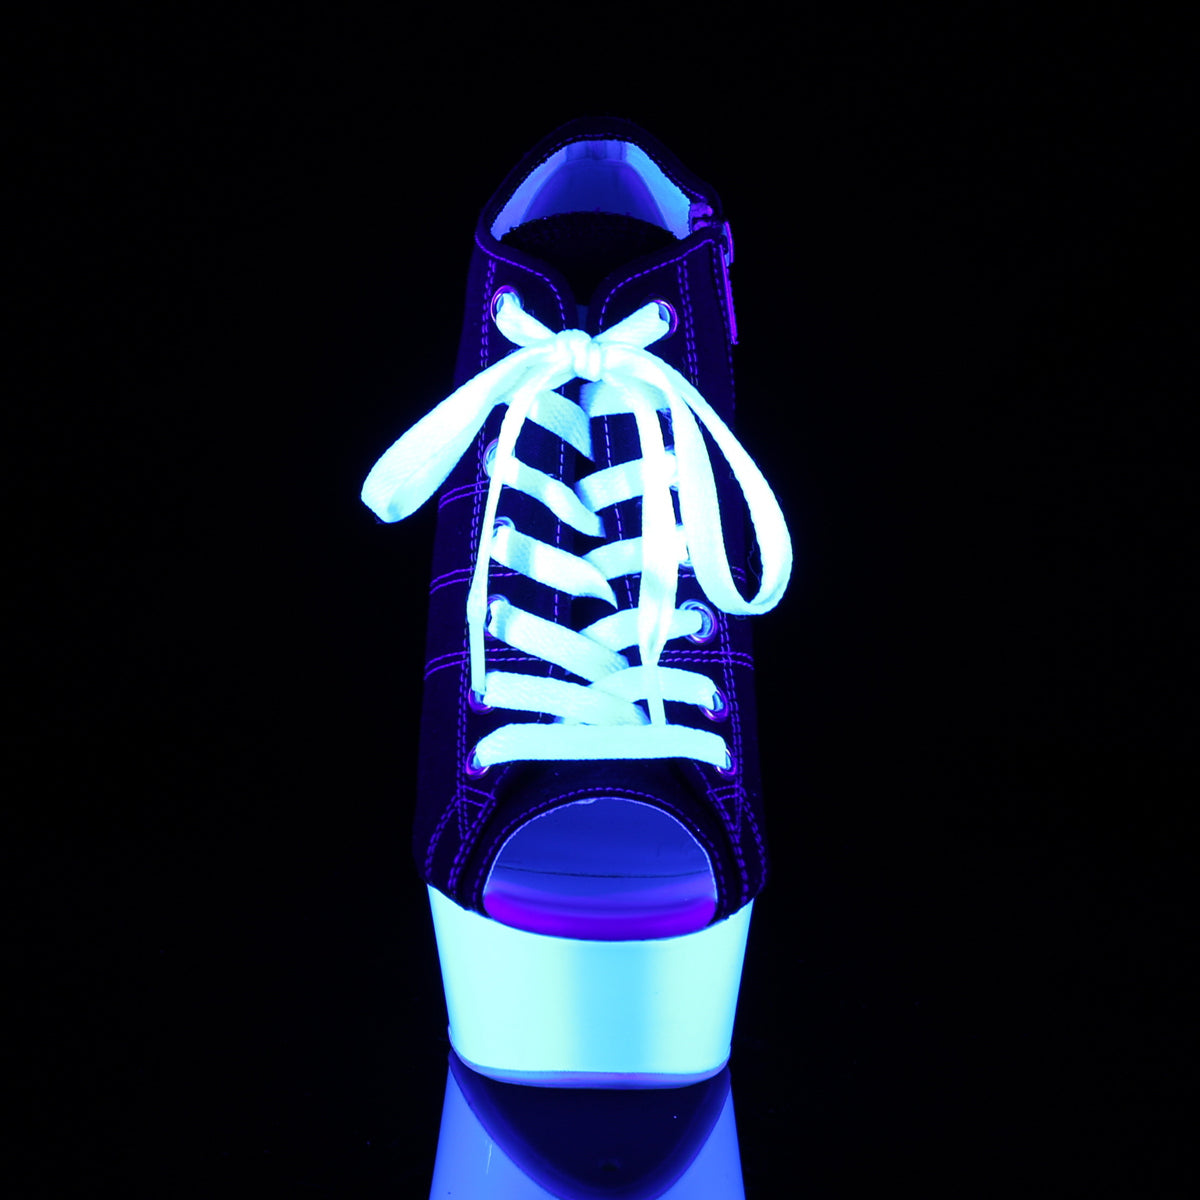 DELIGHT-600SK-01 Pleaser 6" Heel Black Pole Dancer Platforms-Pleaser- Sexy Shoes Alternative Footwear